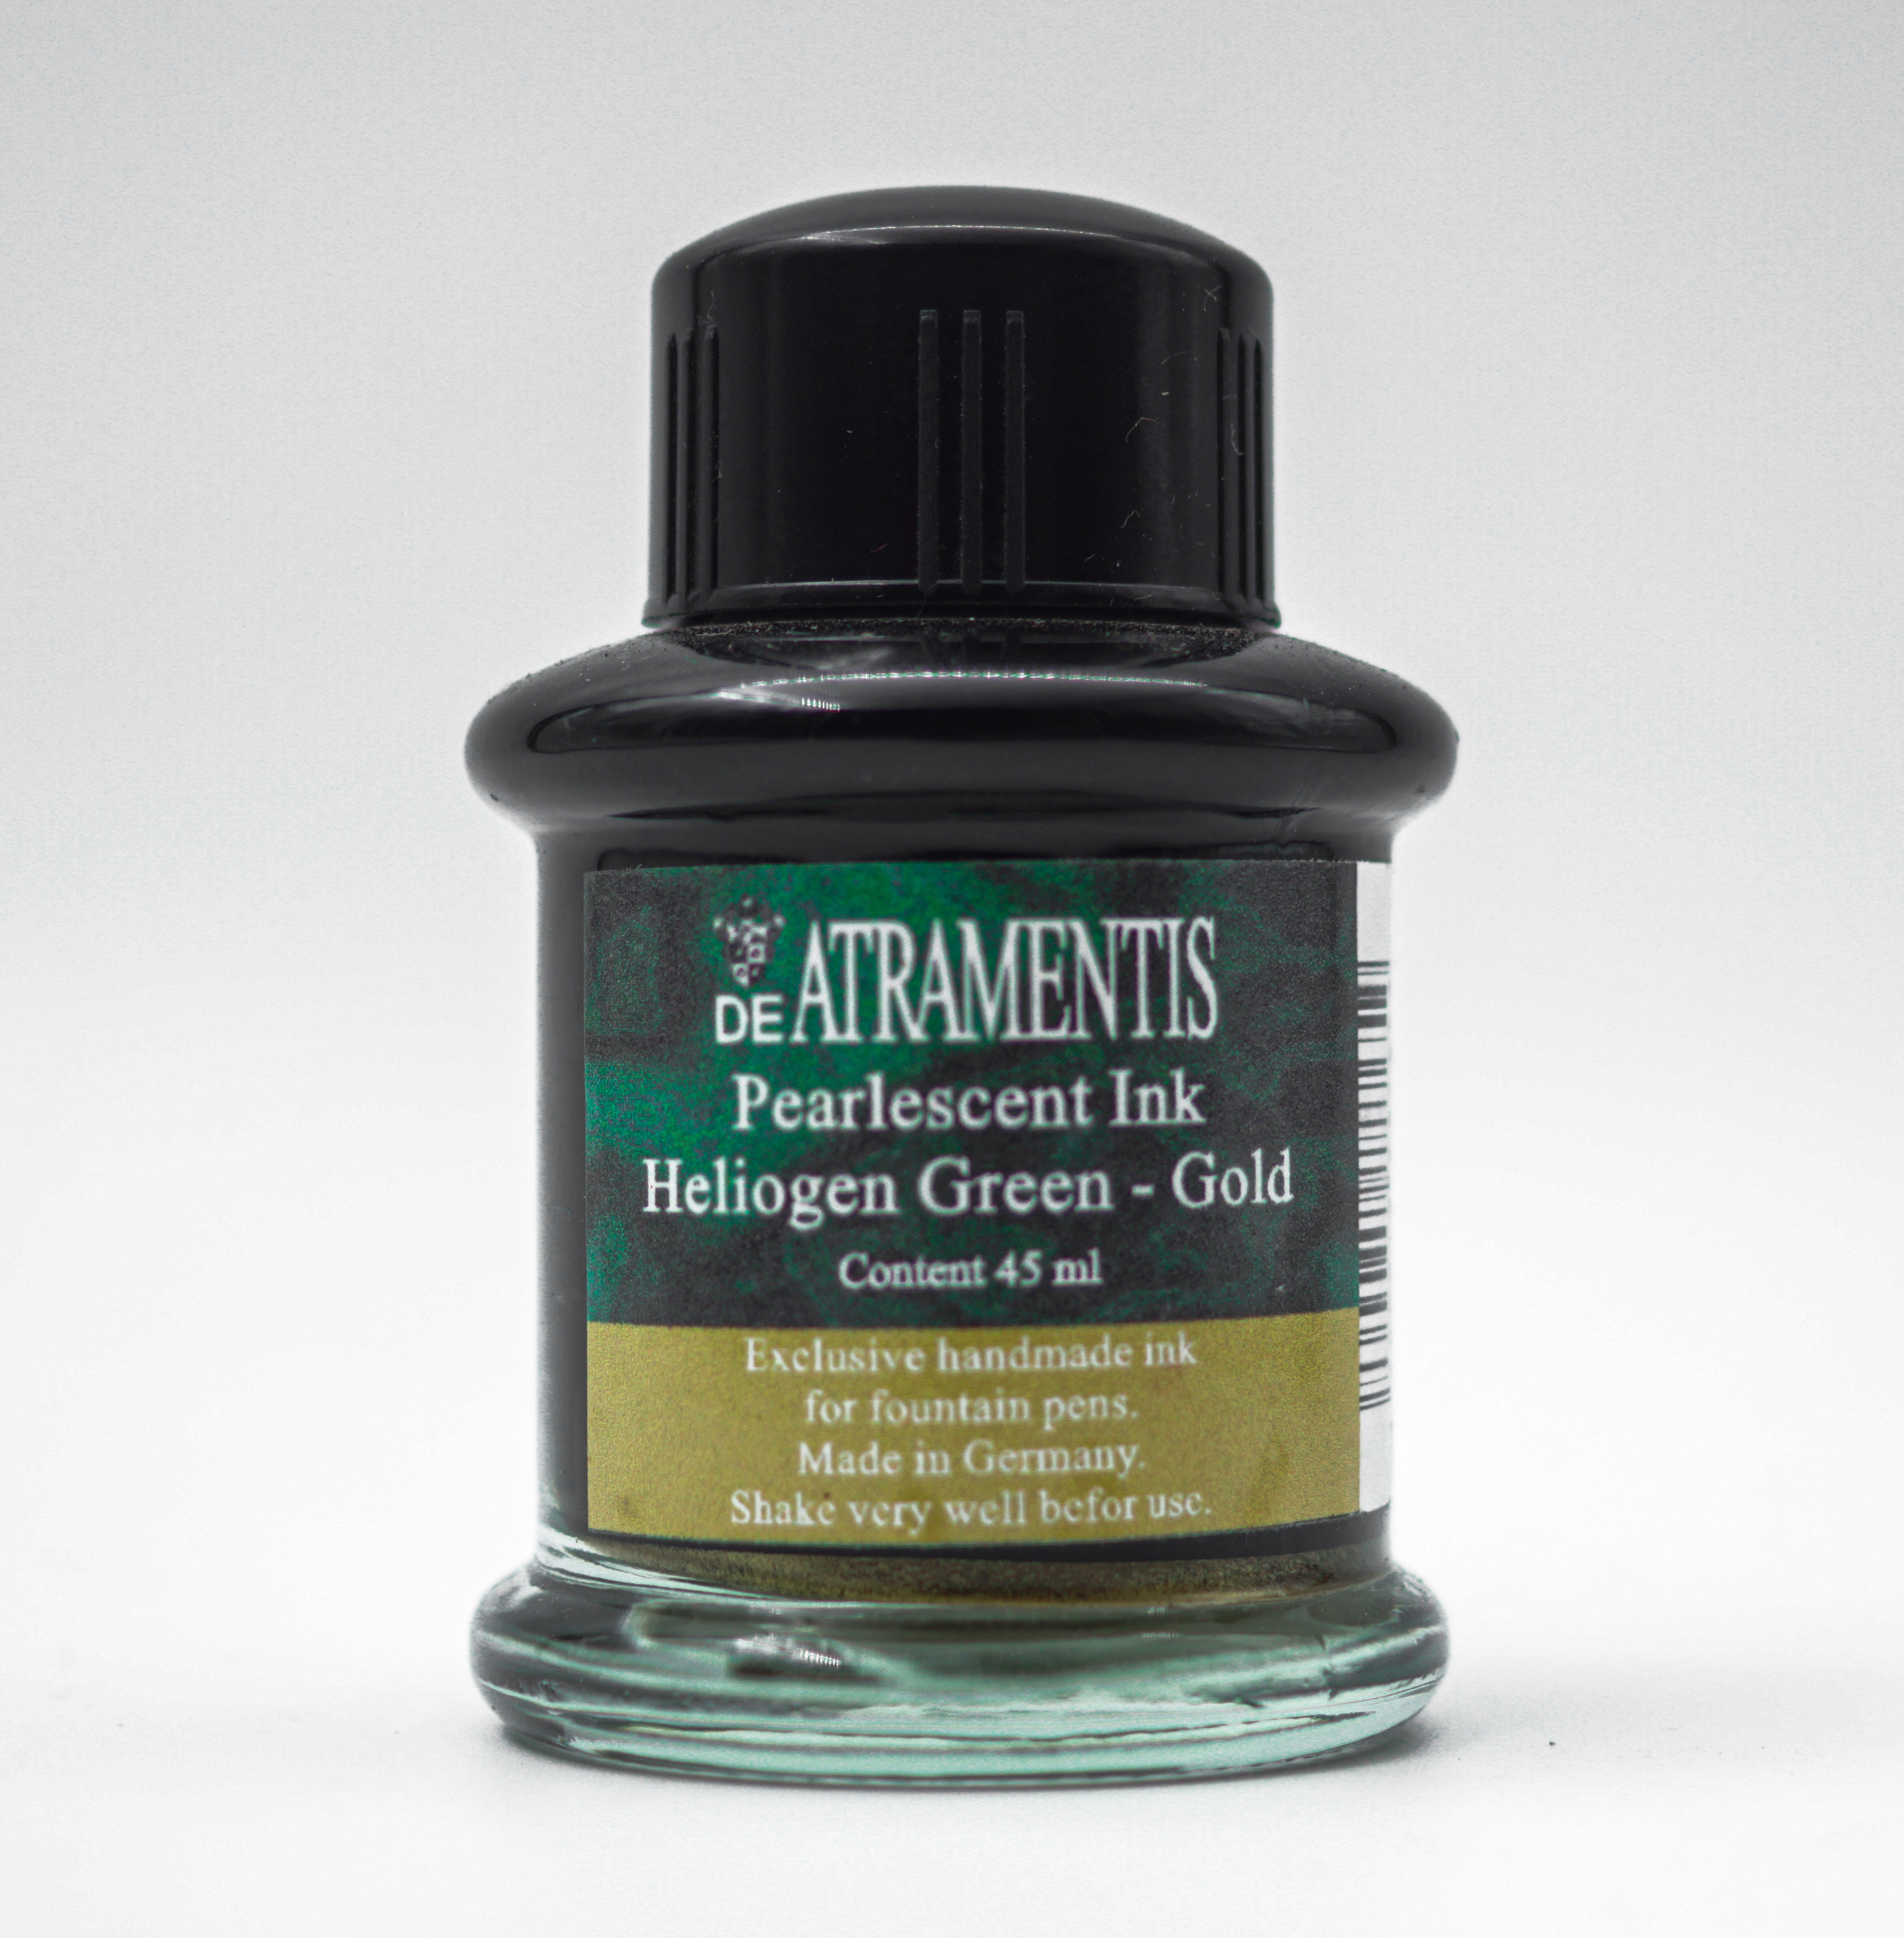 DE ATRAMENTIS Pearlescent Ink Heliogen Green Gold Ink Bottle 45ml SKU 70877